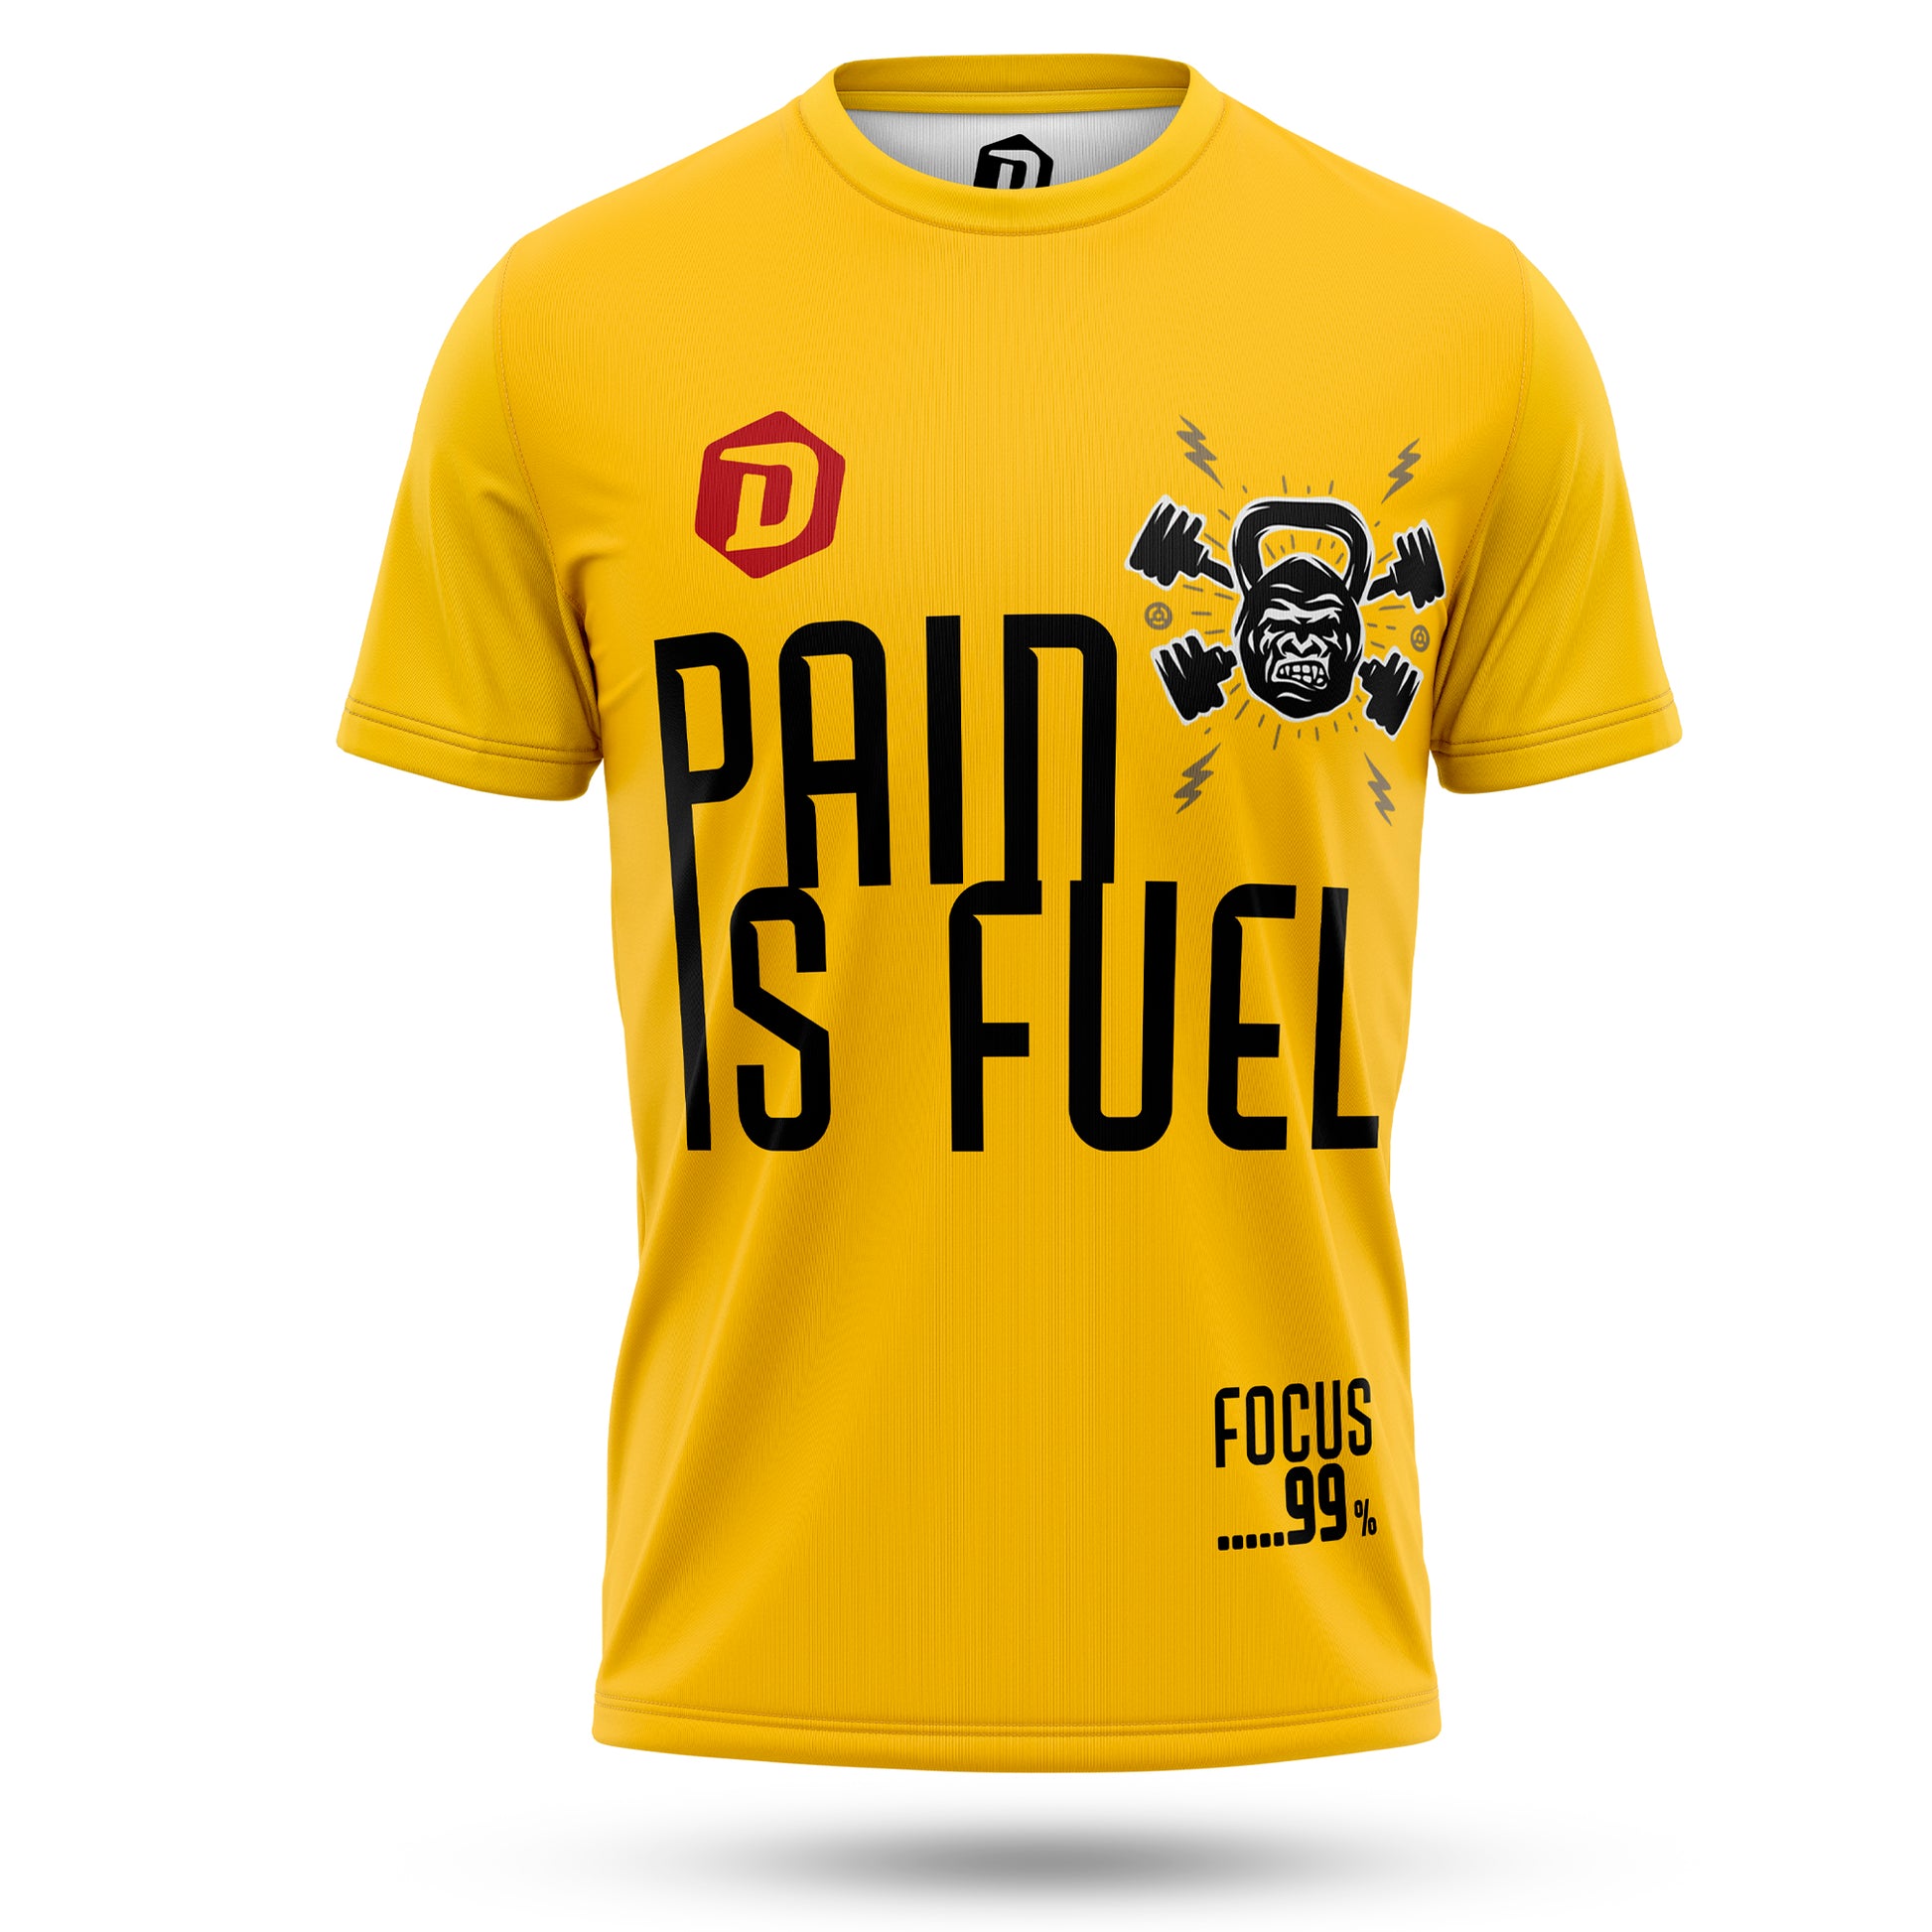 Camiseta técnica PAIN IS FUEL™ - DOPAMINEOFICIAL